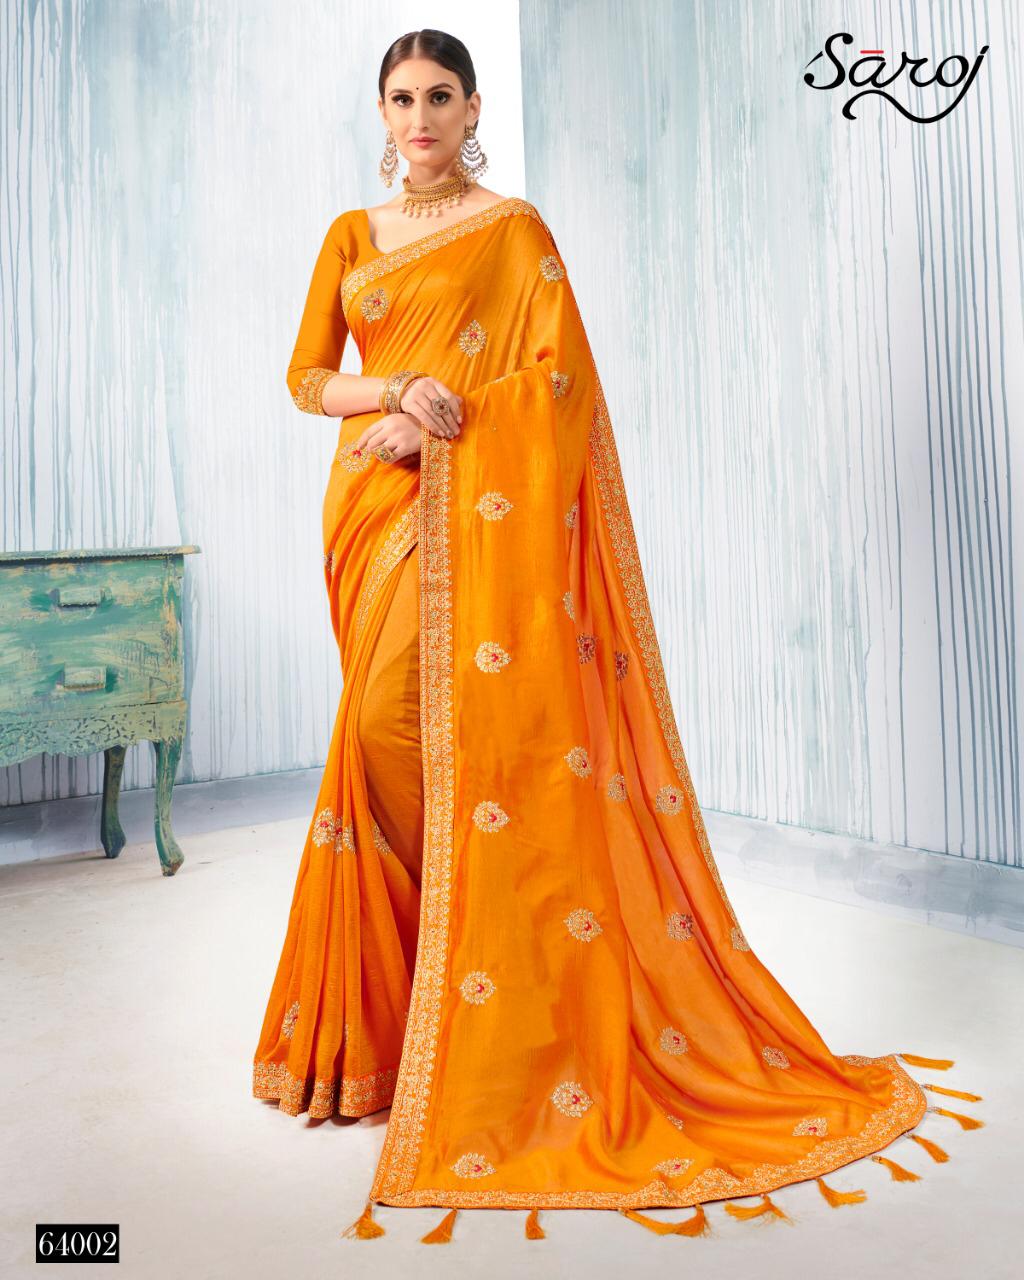 Saroj Deepika beautifully designed innovative style sarees in factory prices